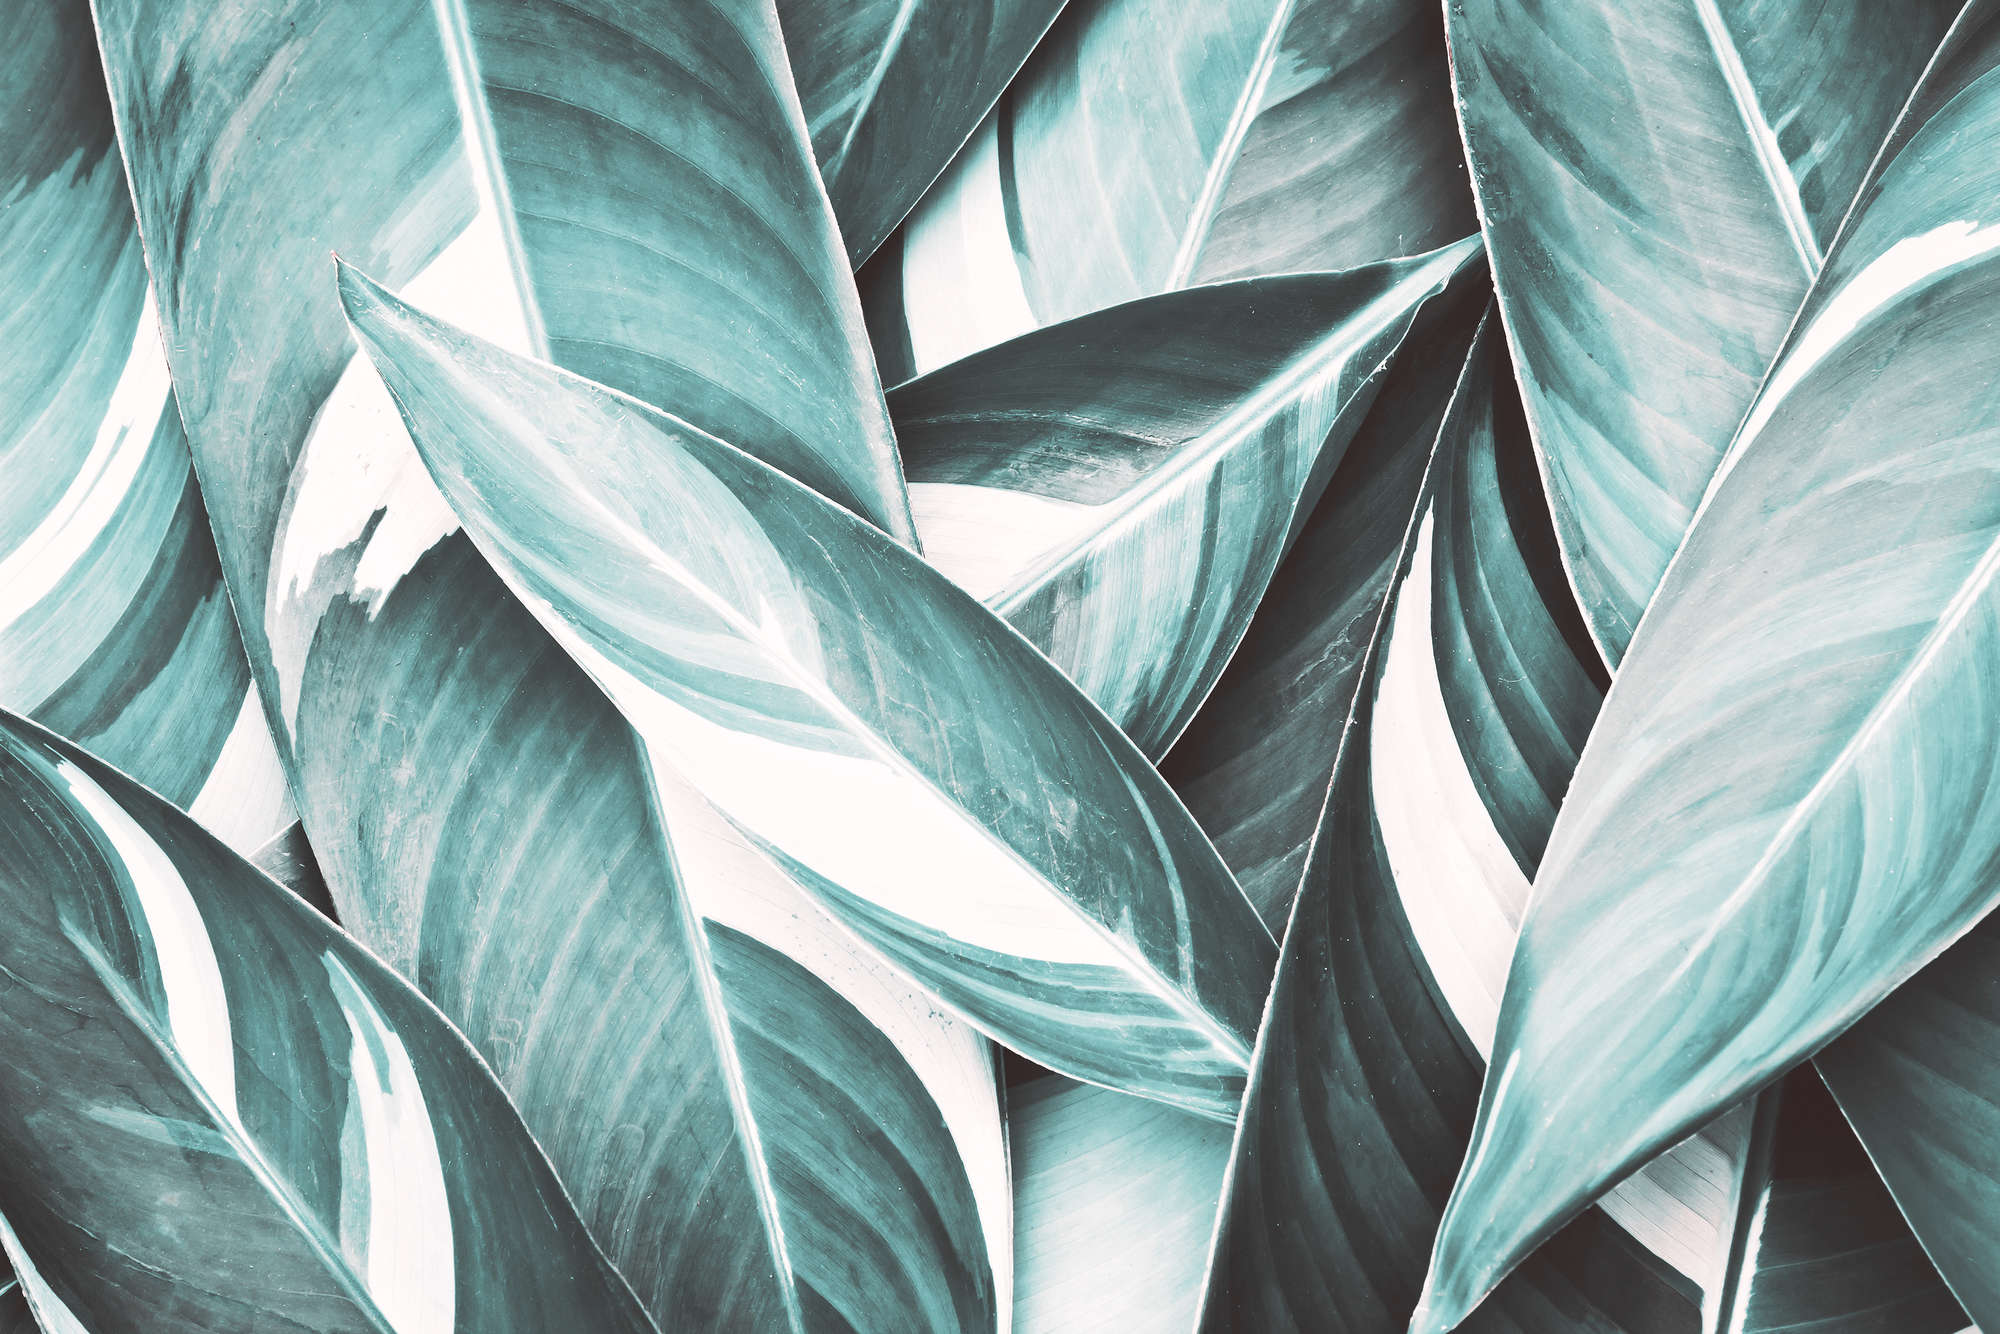             Nature mural palm leaves motif grey on matt smooth fleece
        